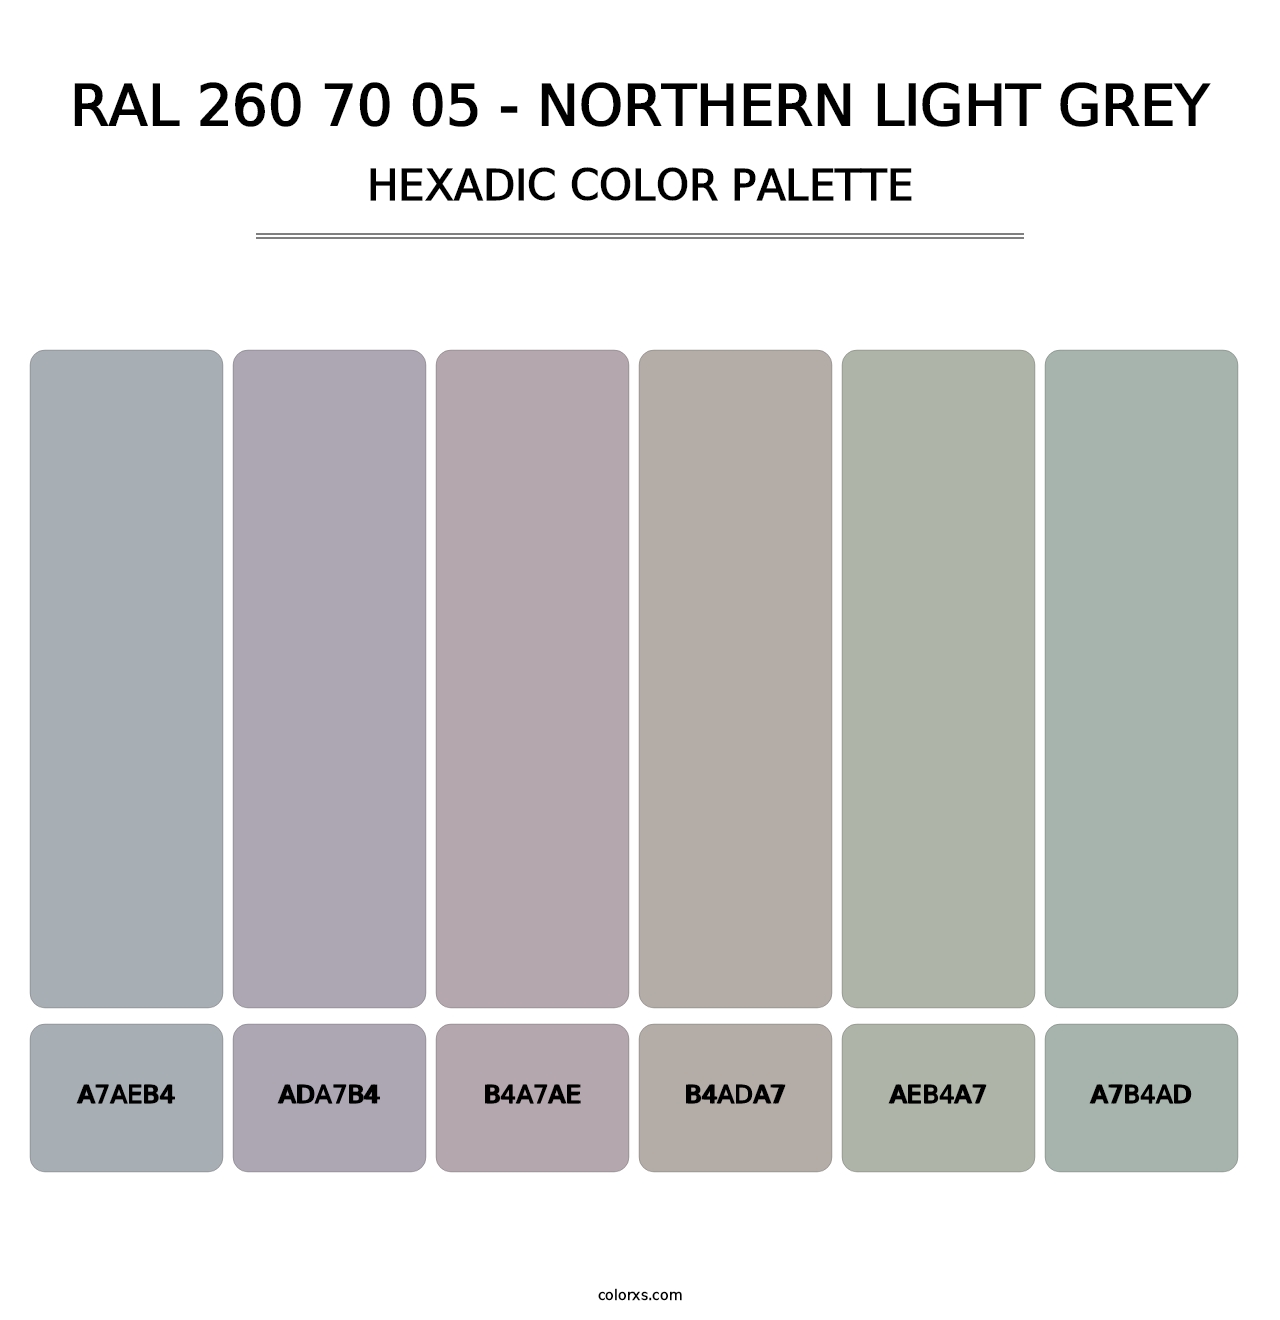 RAL 260 70 05 - Northern Light Grey - Hexadic Color Palette